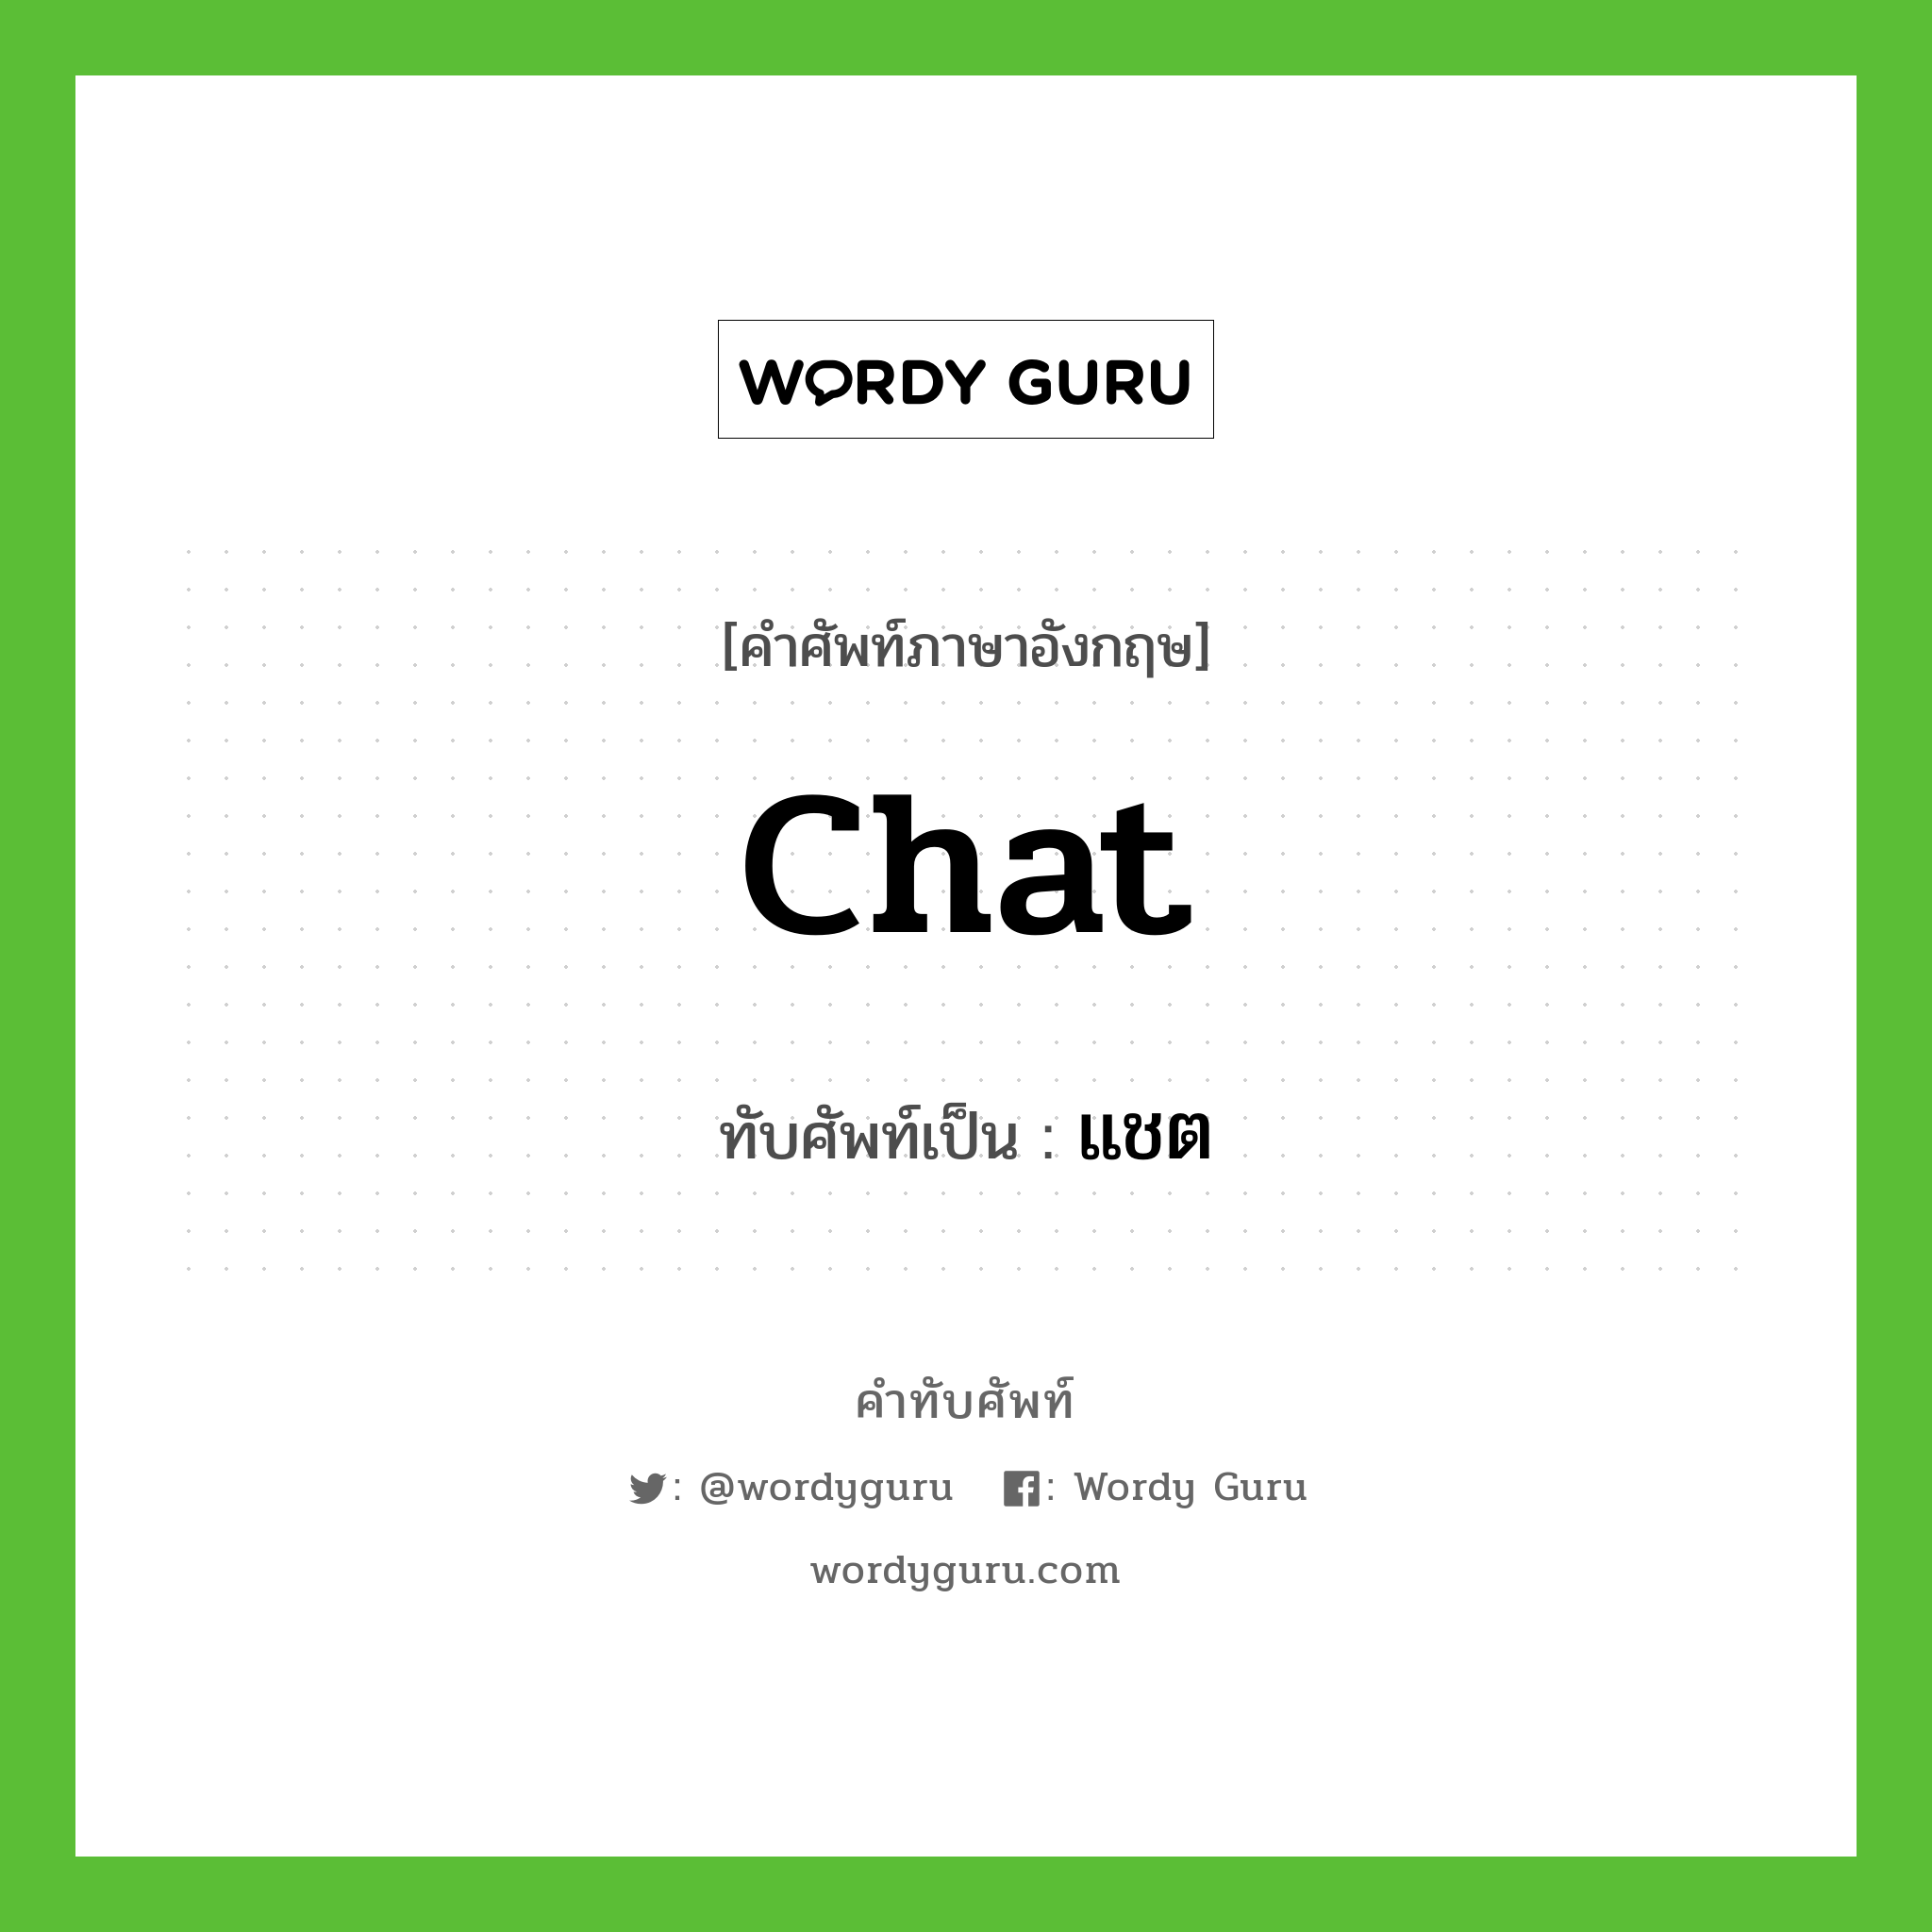 chat เขียนเป็นคำไทยว่าอะไร?, คำศัพท์ภาษาอังกฤษ chat ทับศัพท์เป็น แชต